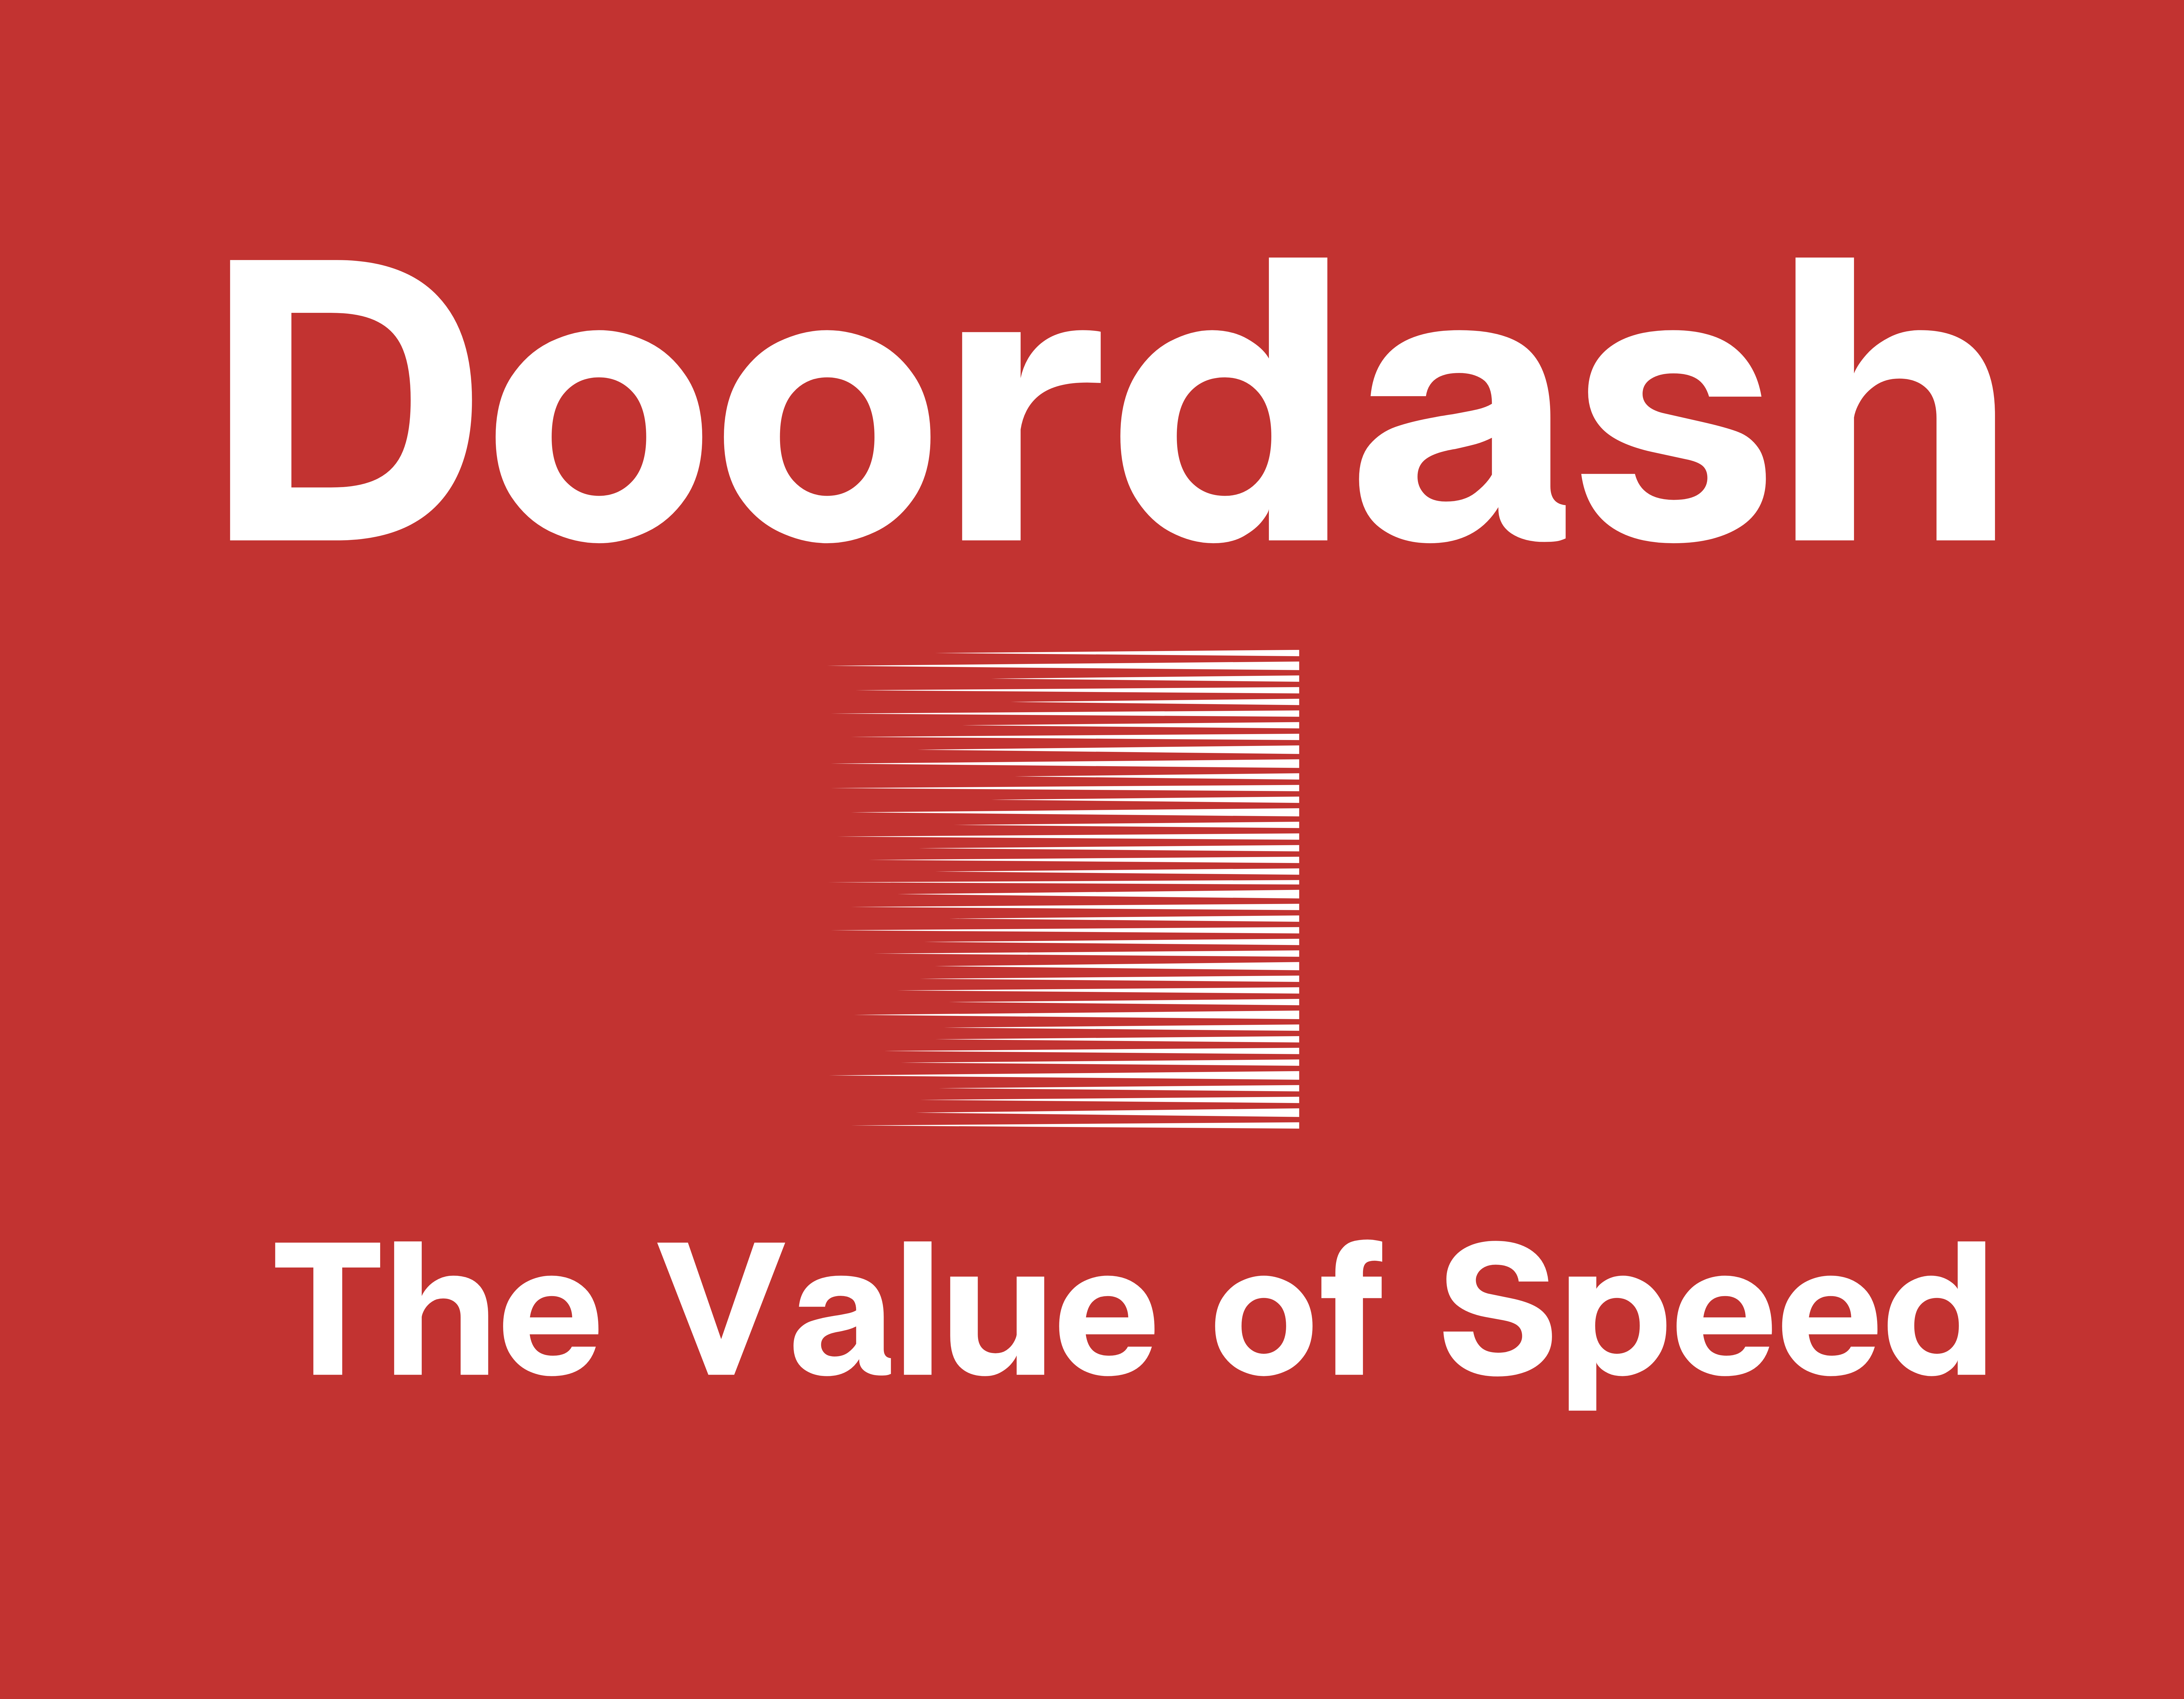 DoorDash: The Value of Speed - by Mario Gabriele